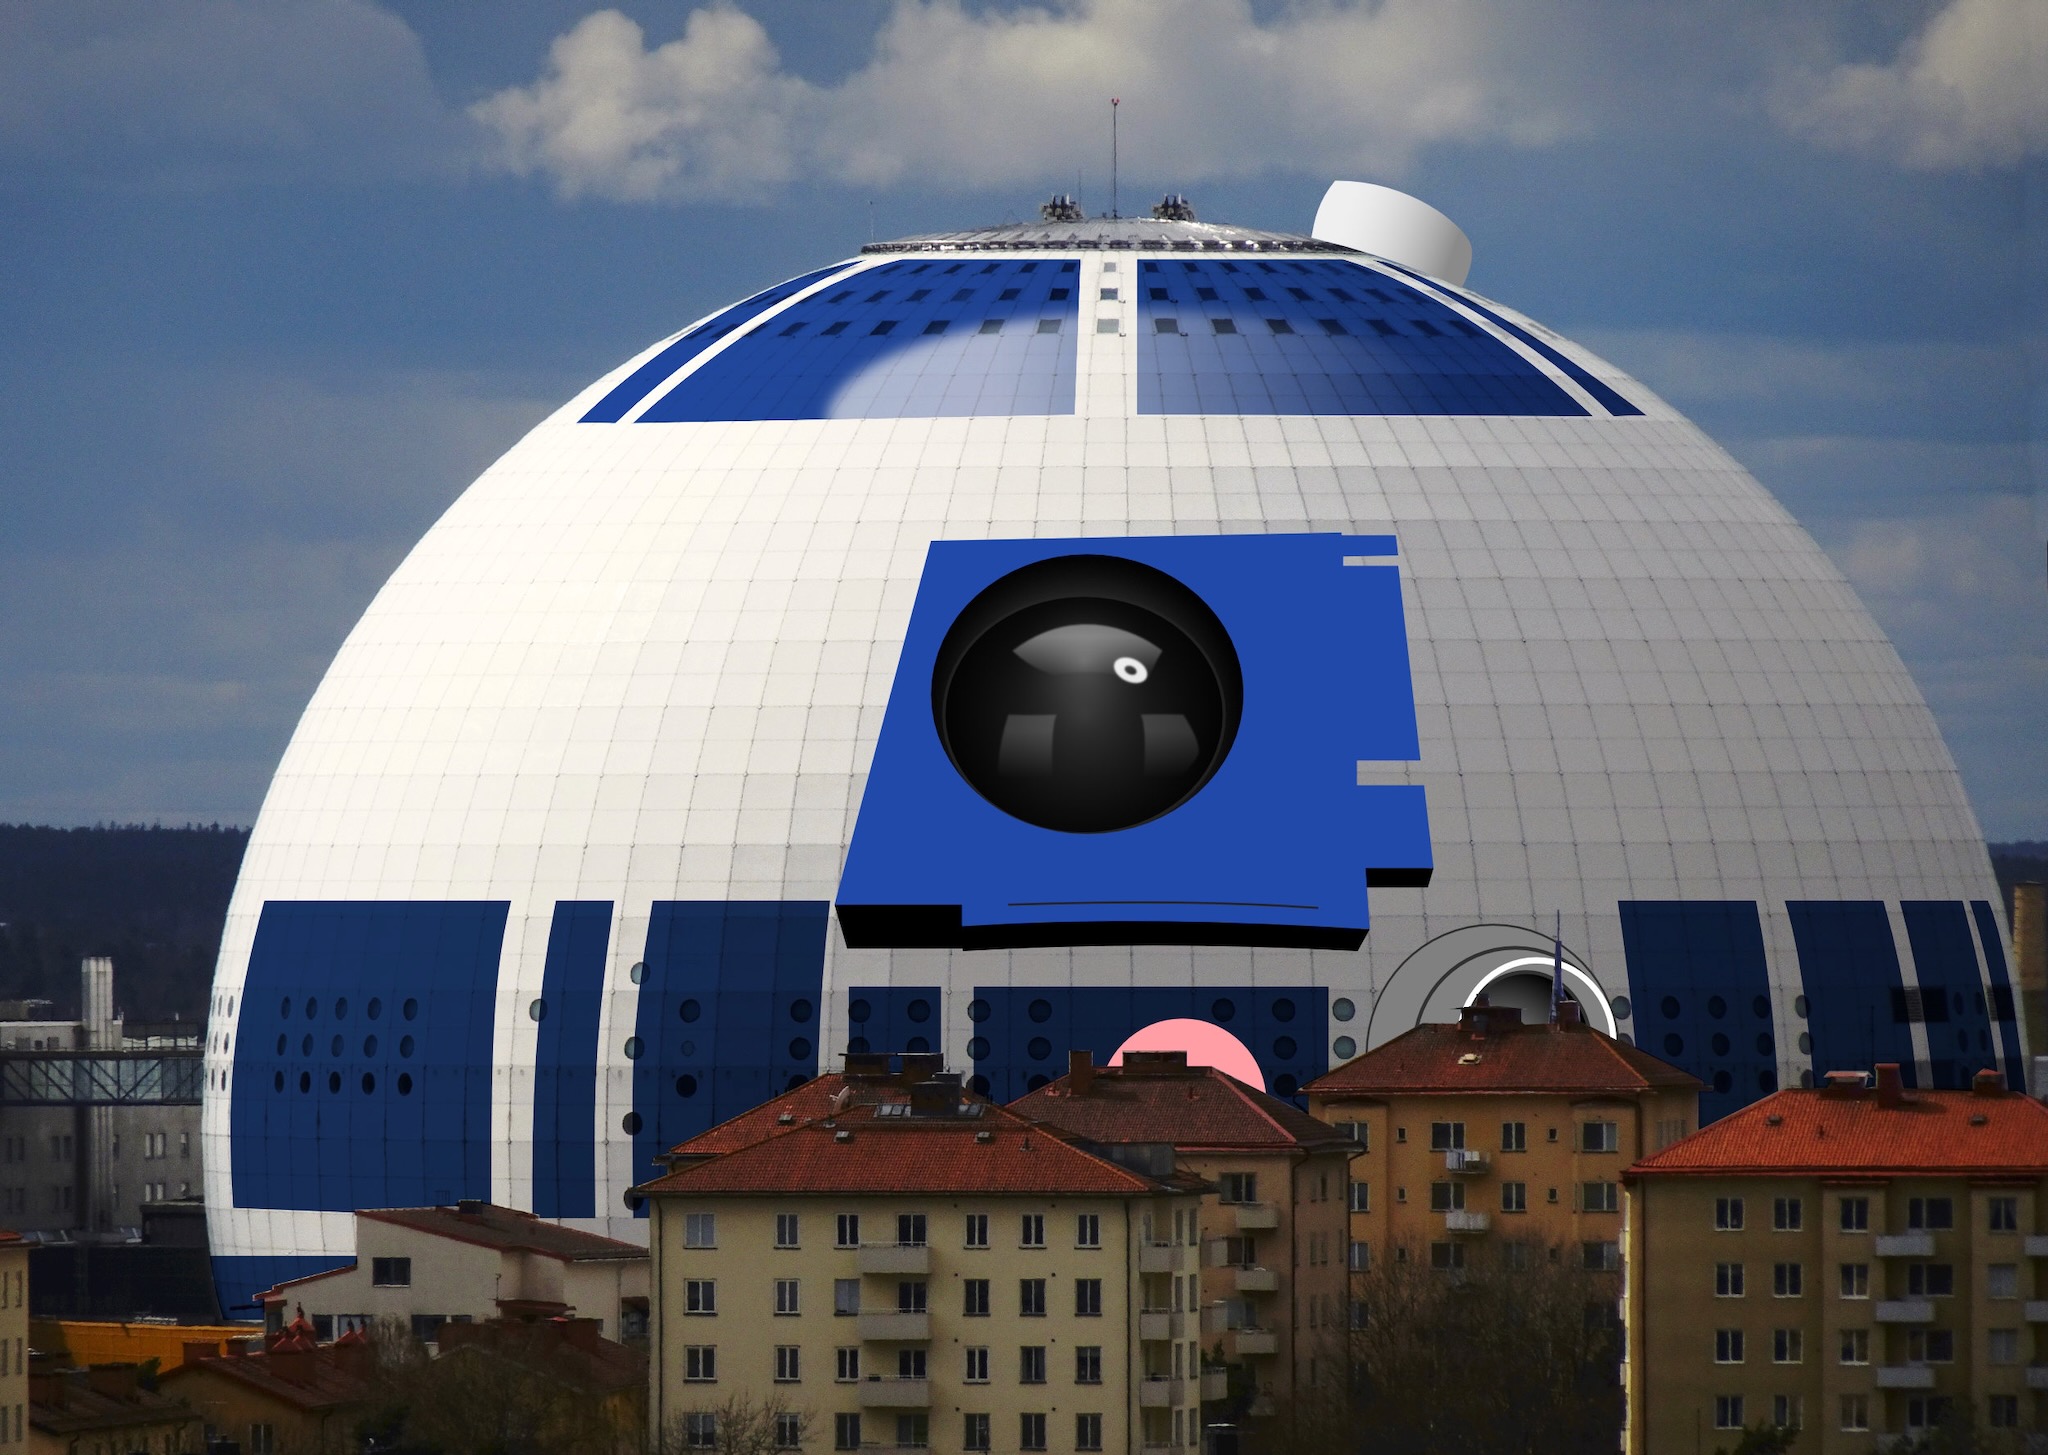 Globen in Stockholm, painted as R2D2